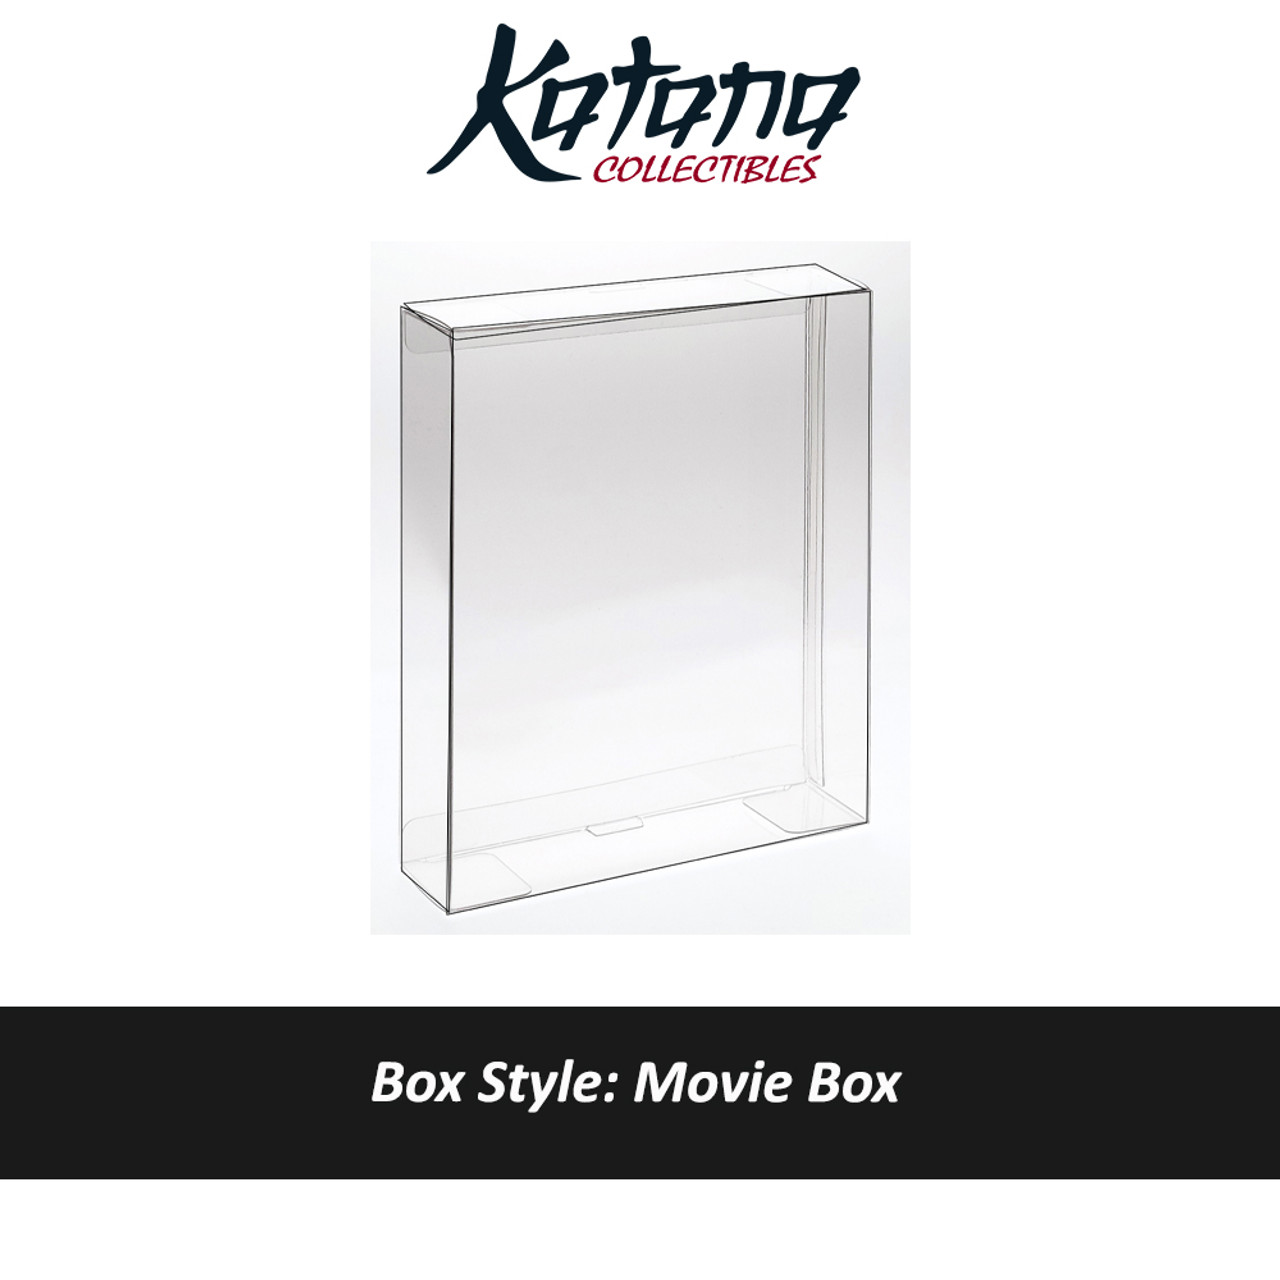 Katana Collectibles Protector For Box of Burt. Umbrella Entertainment